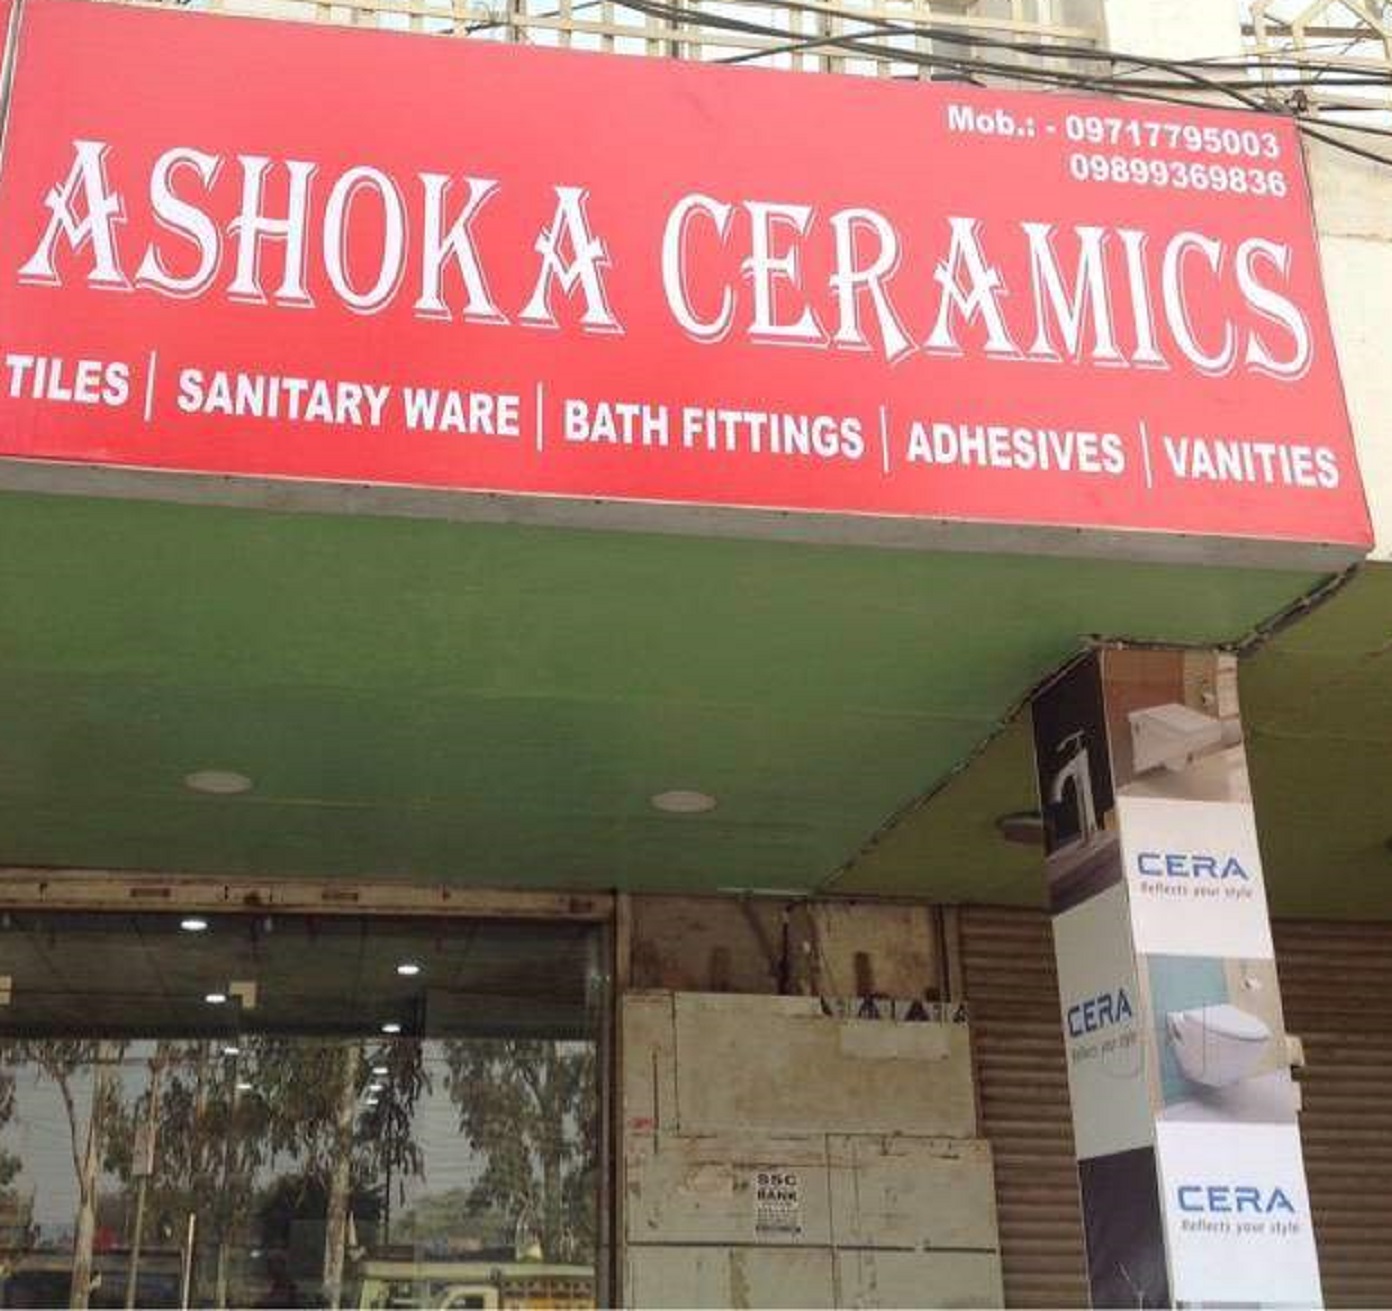 Ashoka Ceramics